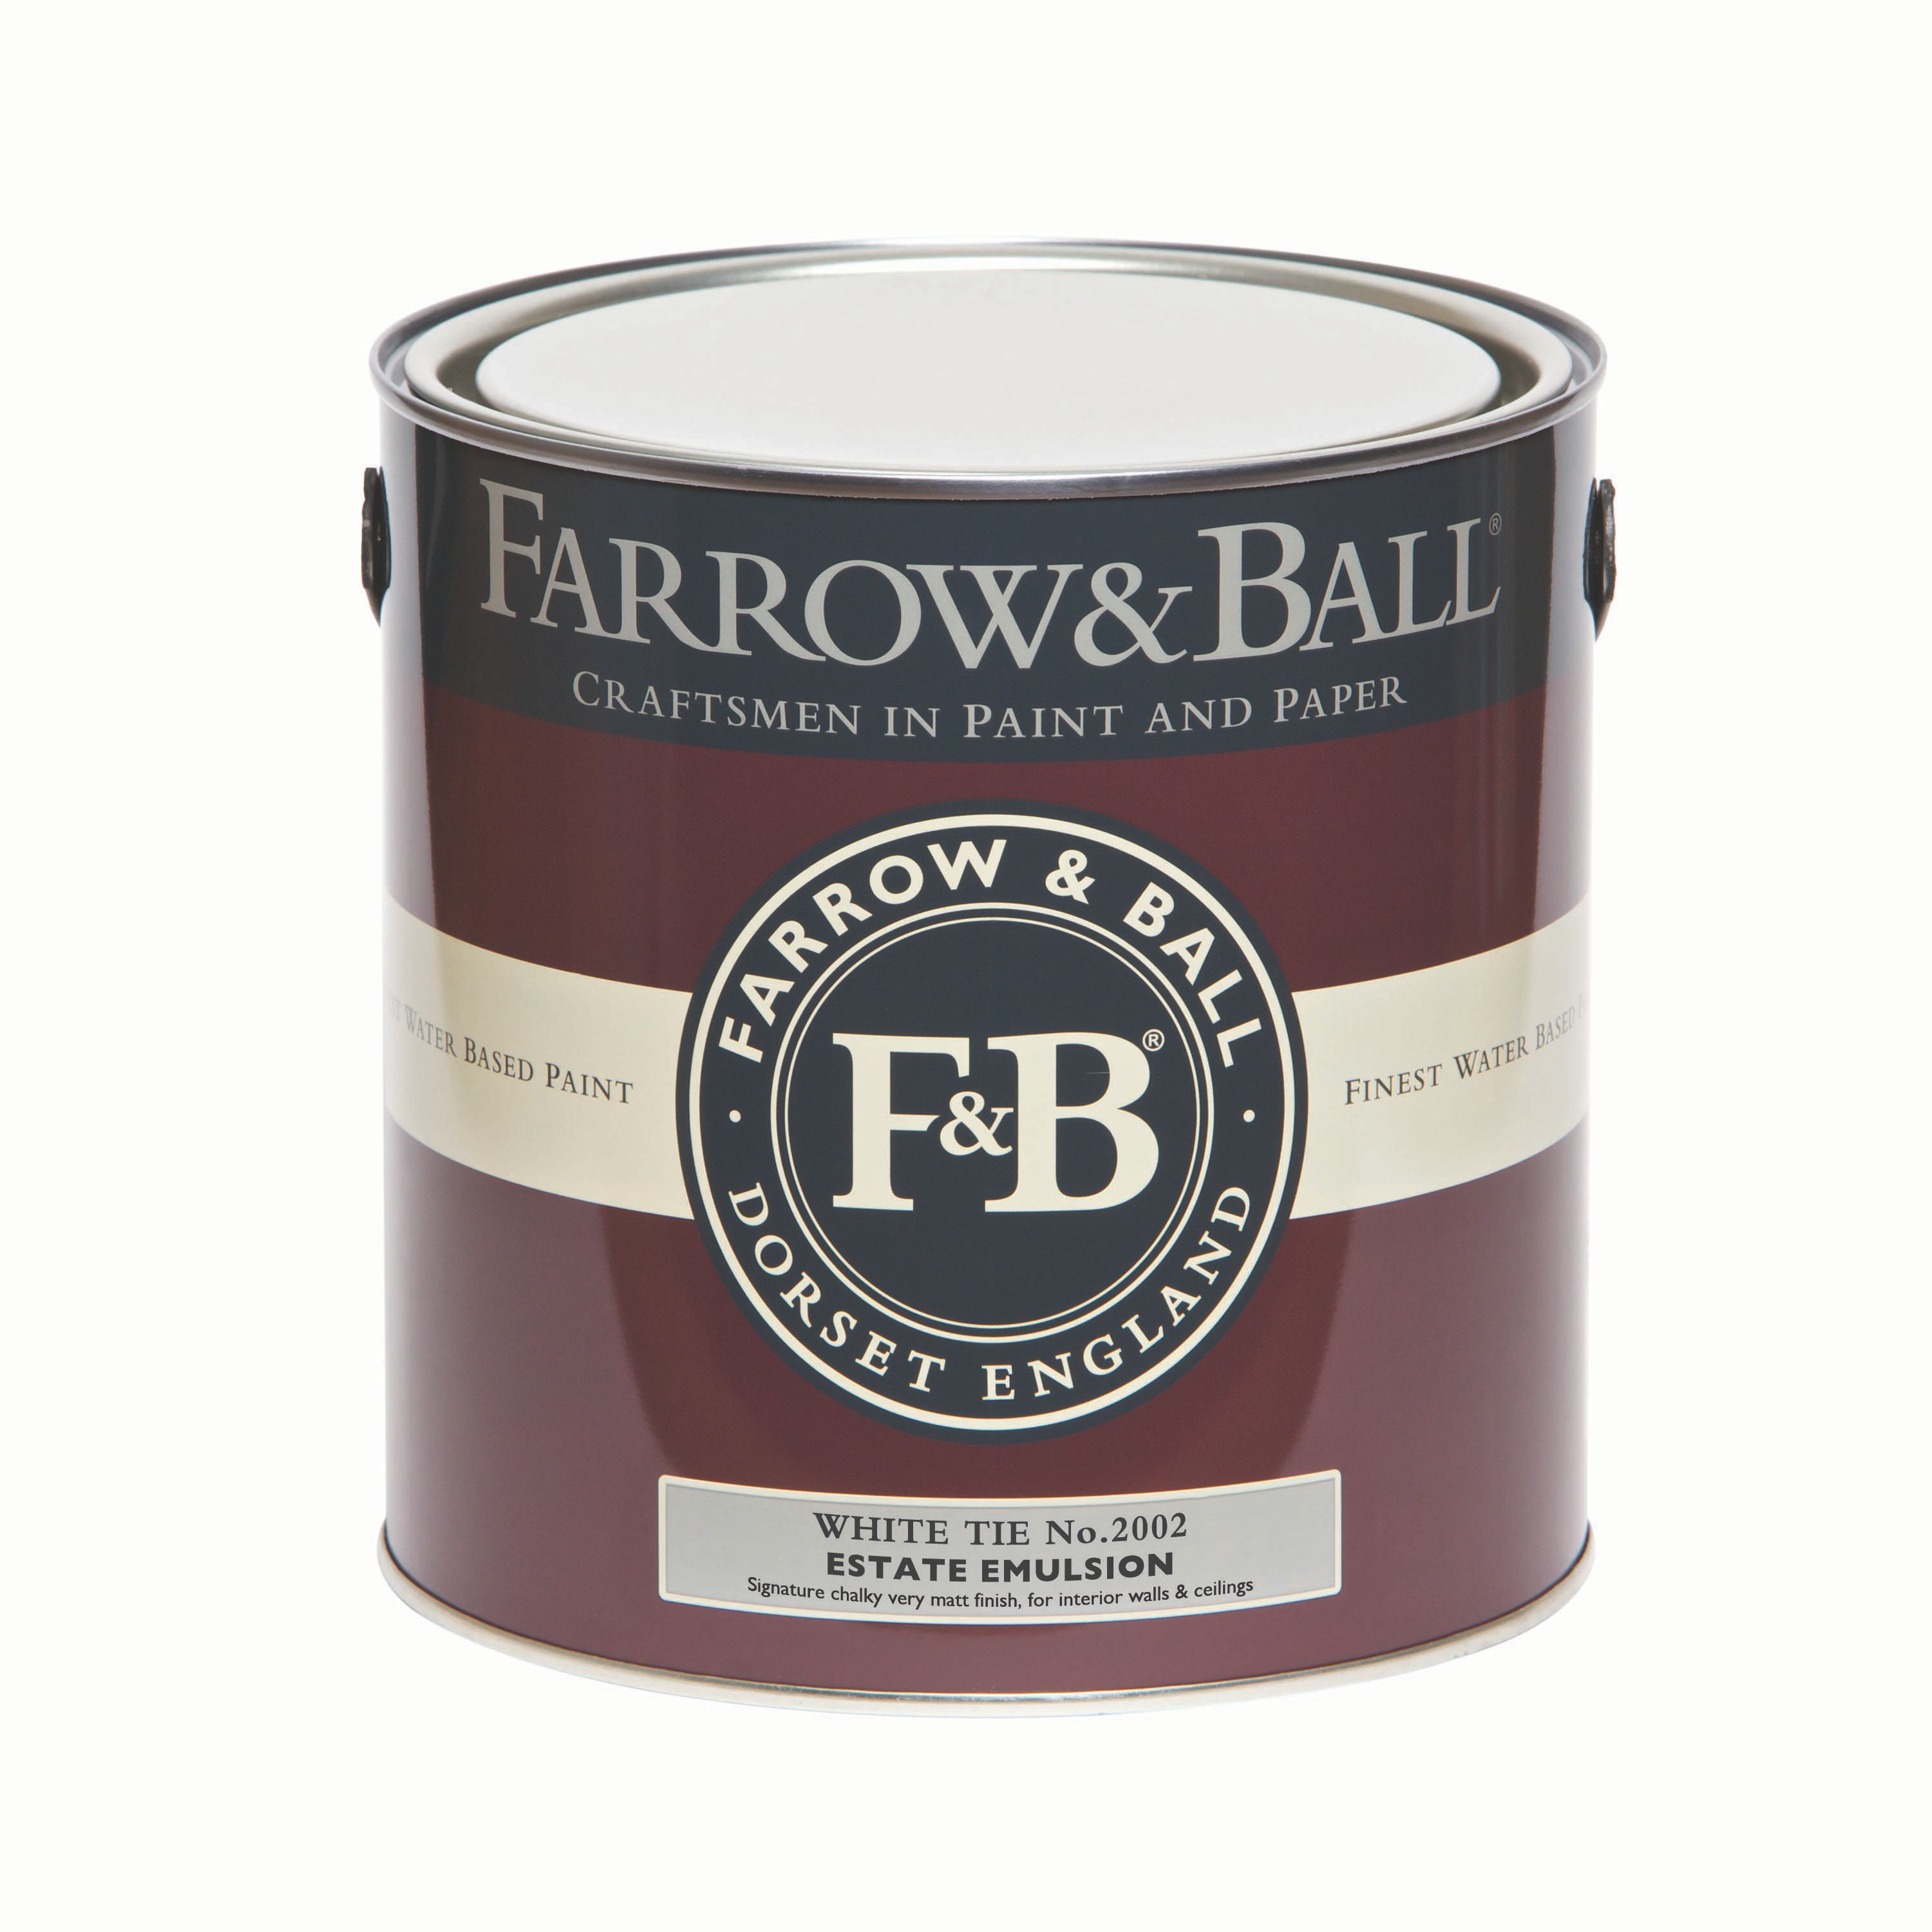 Farrow & Ball Estate White tie Matt Emulsion paint, 2.5L